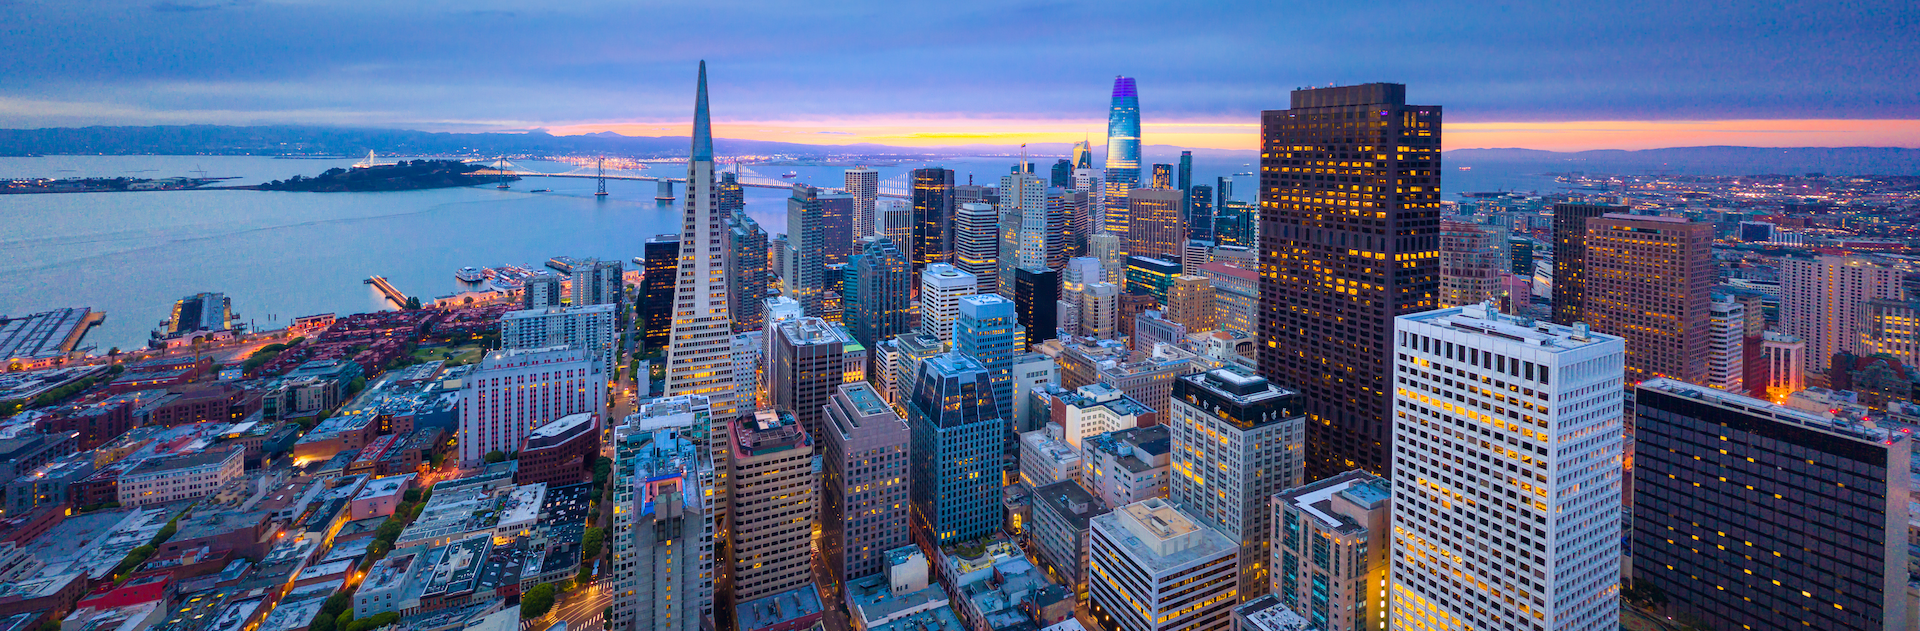 Downtown San Francisco skyline aerial view